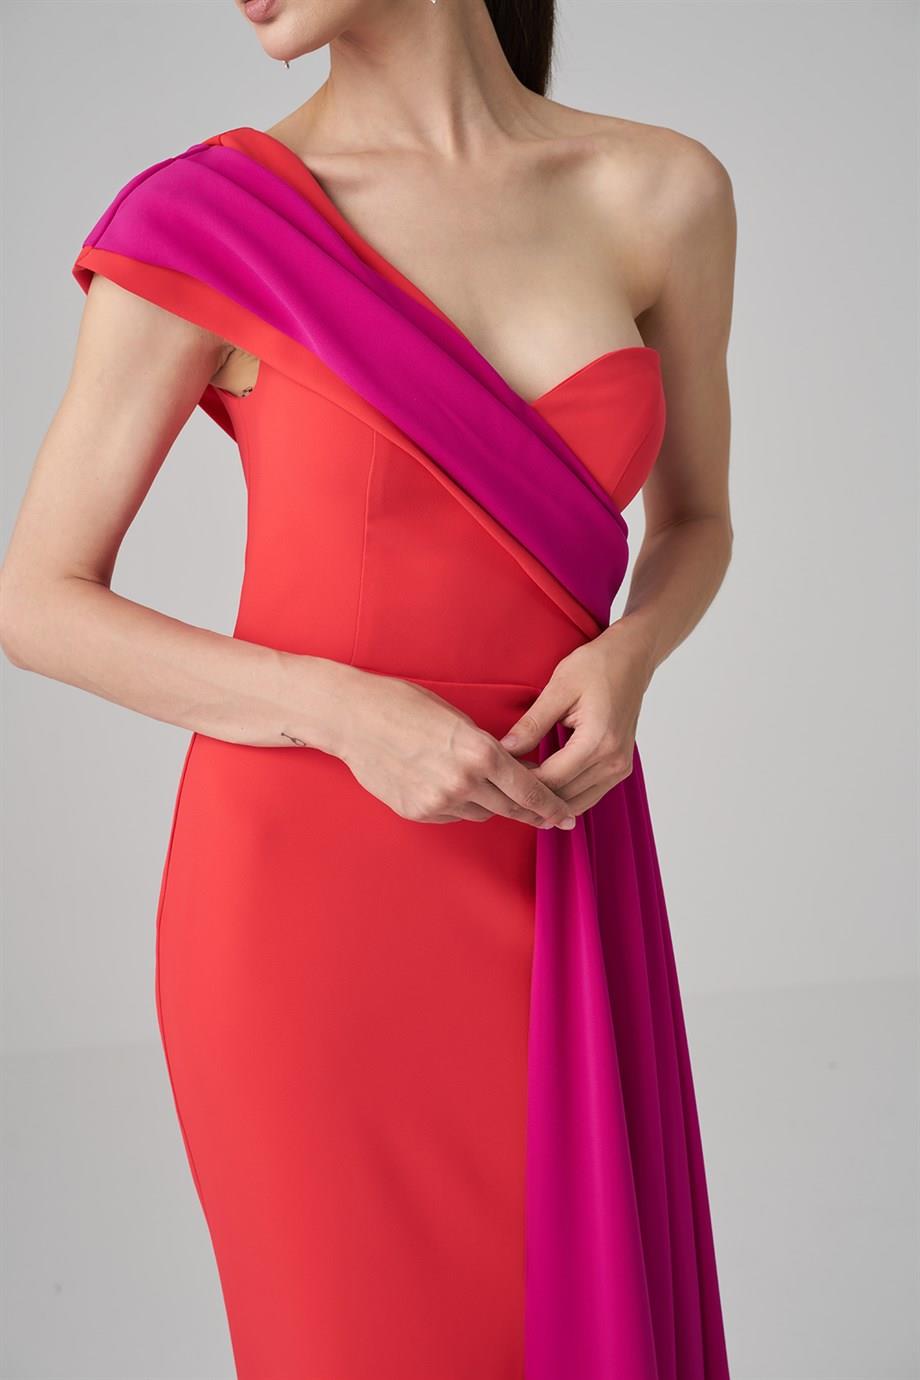 Picture of Tina Garni Crepe Fabric Oranj Fuchsia Two Color Dress